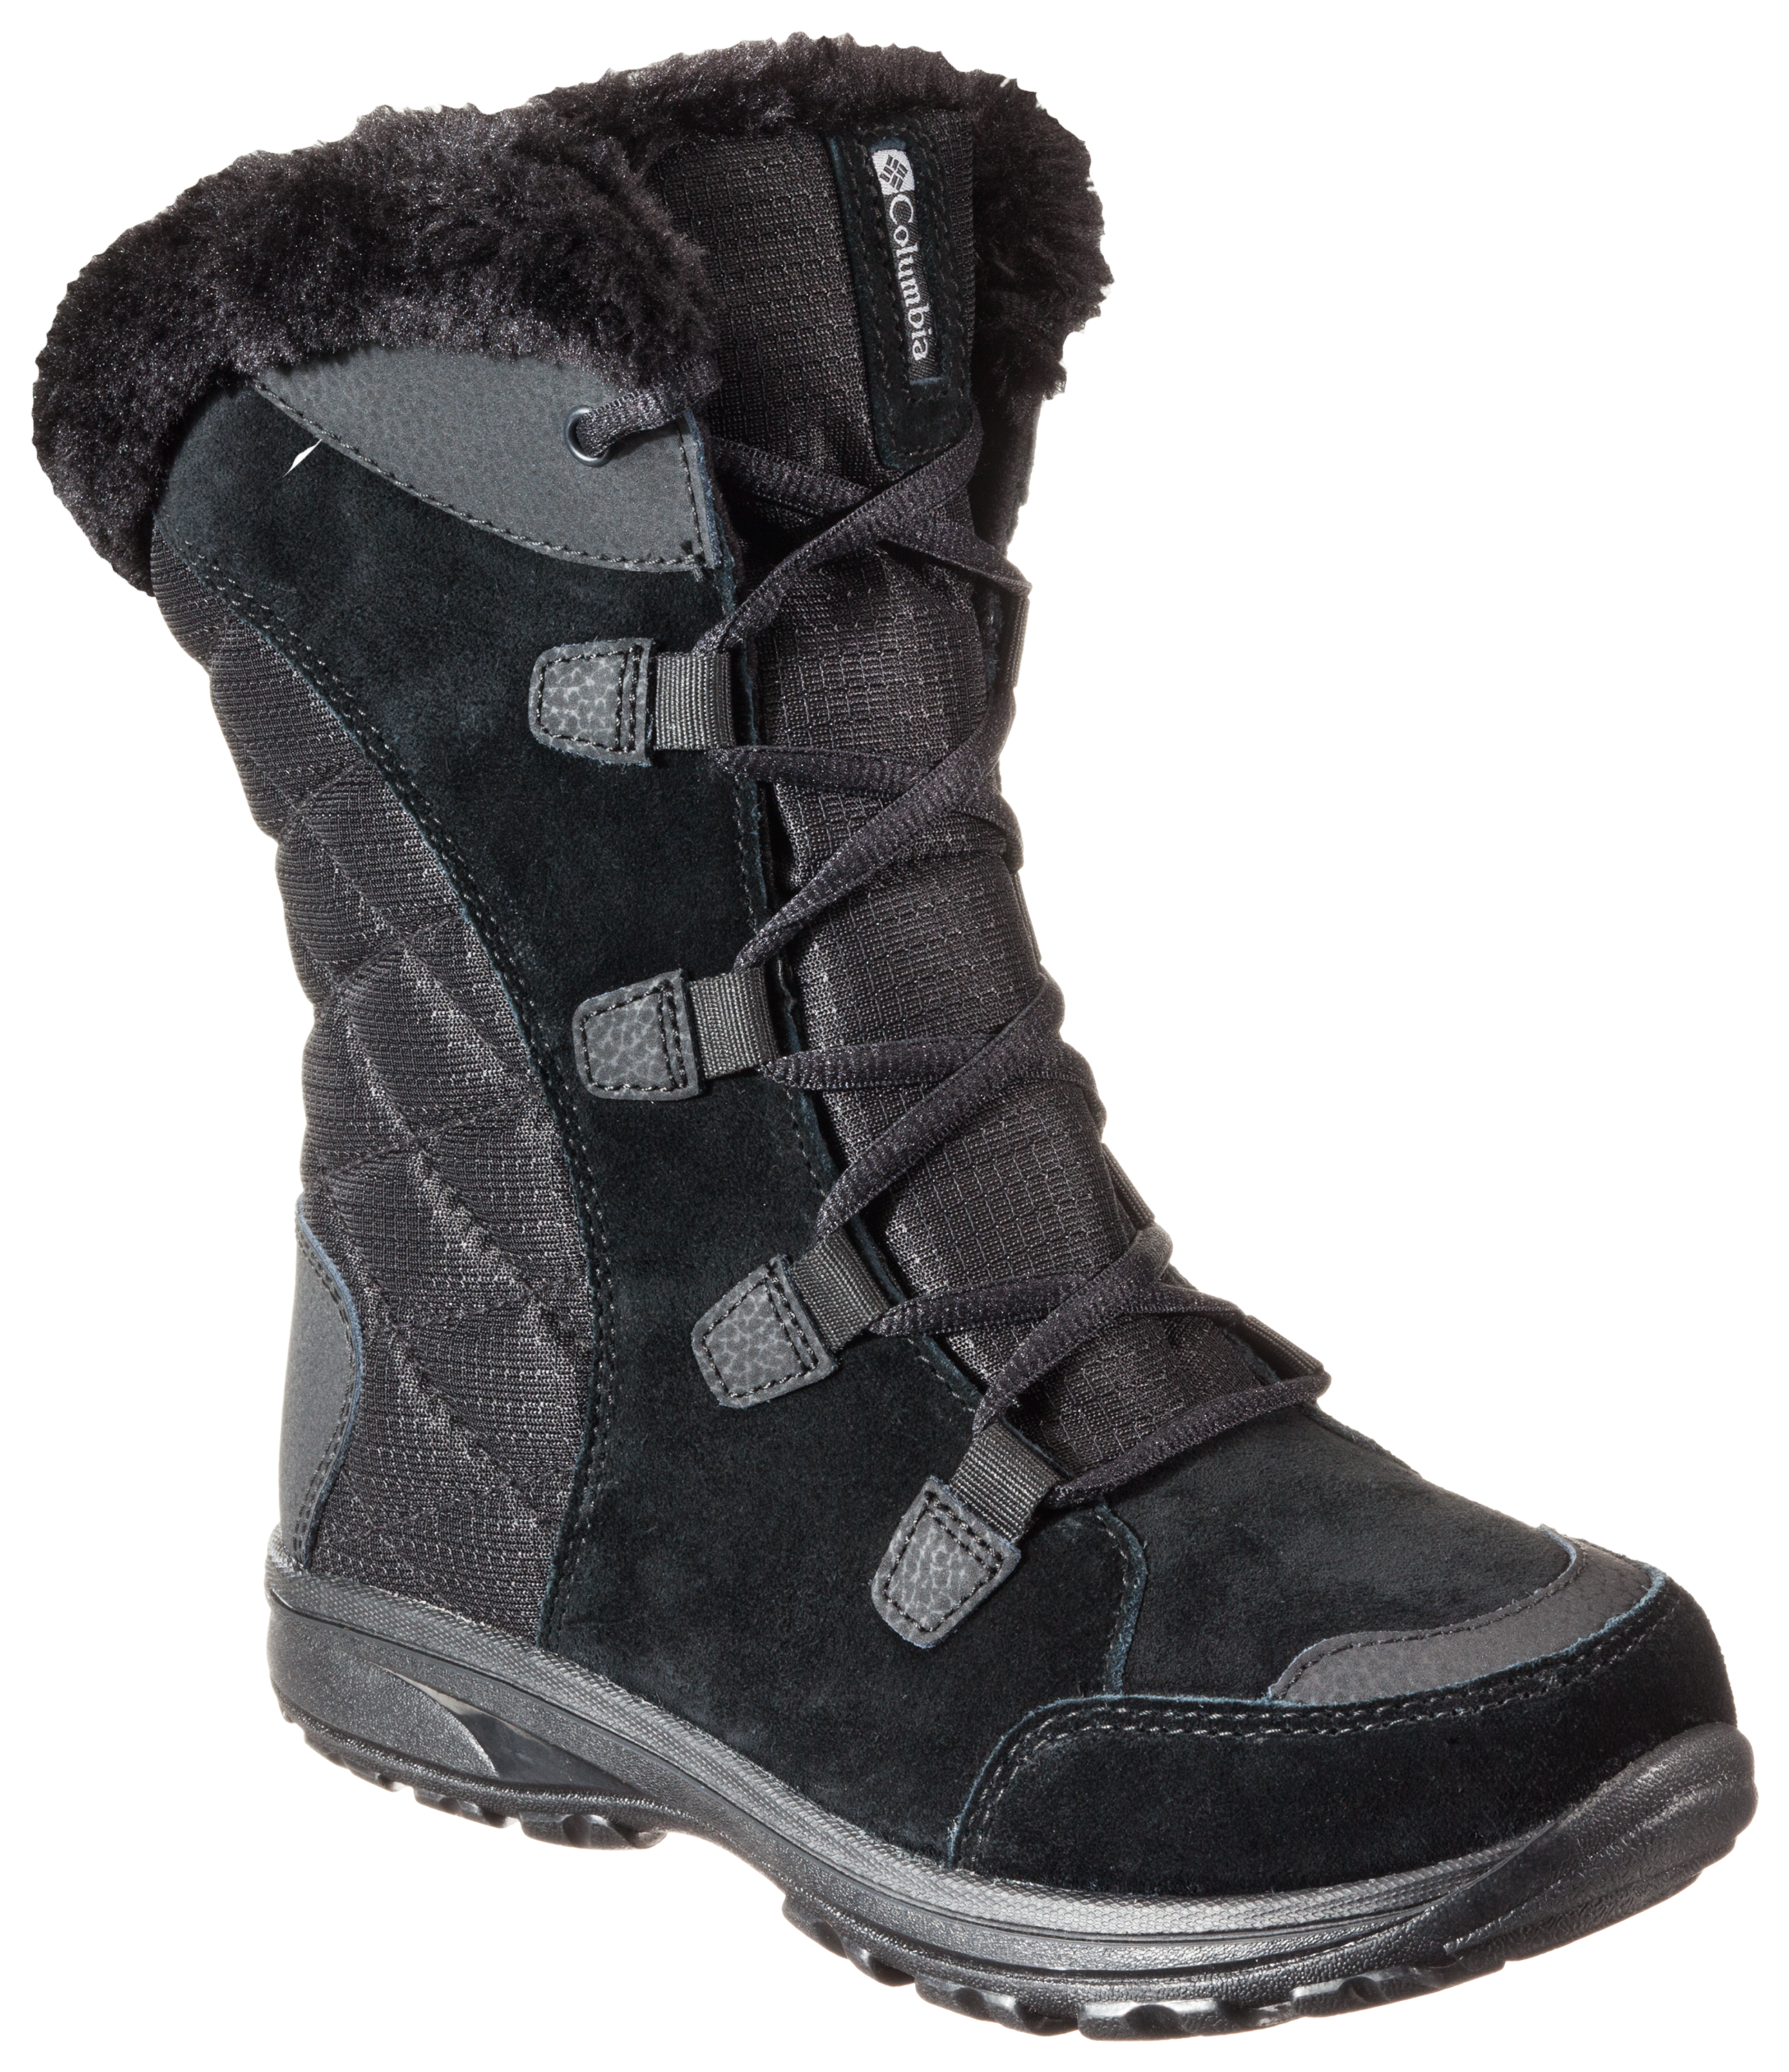 Columbia Ice Maiden II Waterproof Insulated Winter Boots for Ladies ...